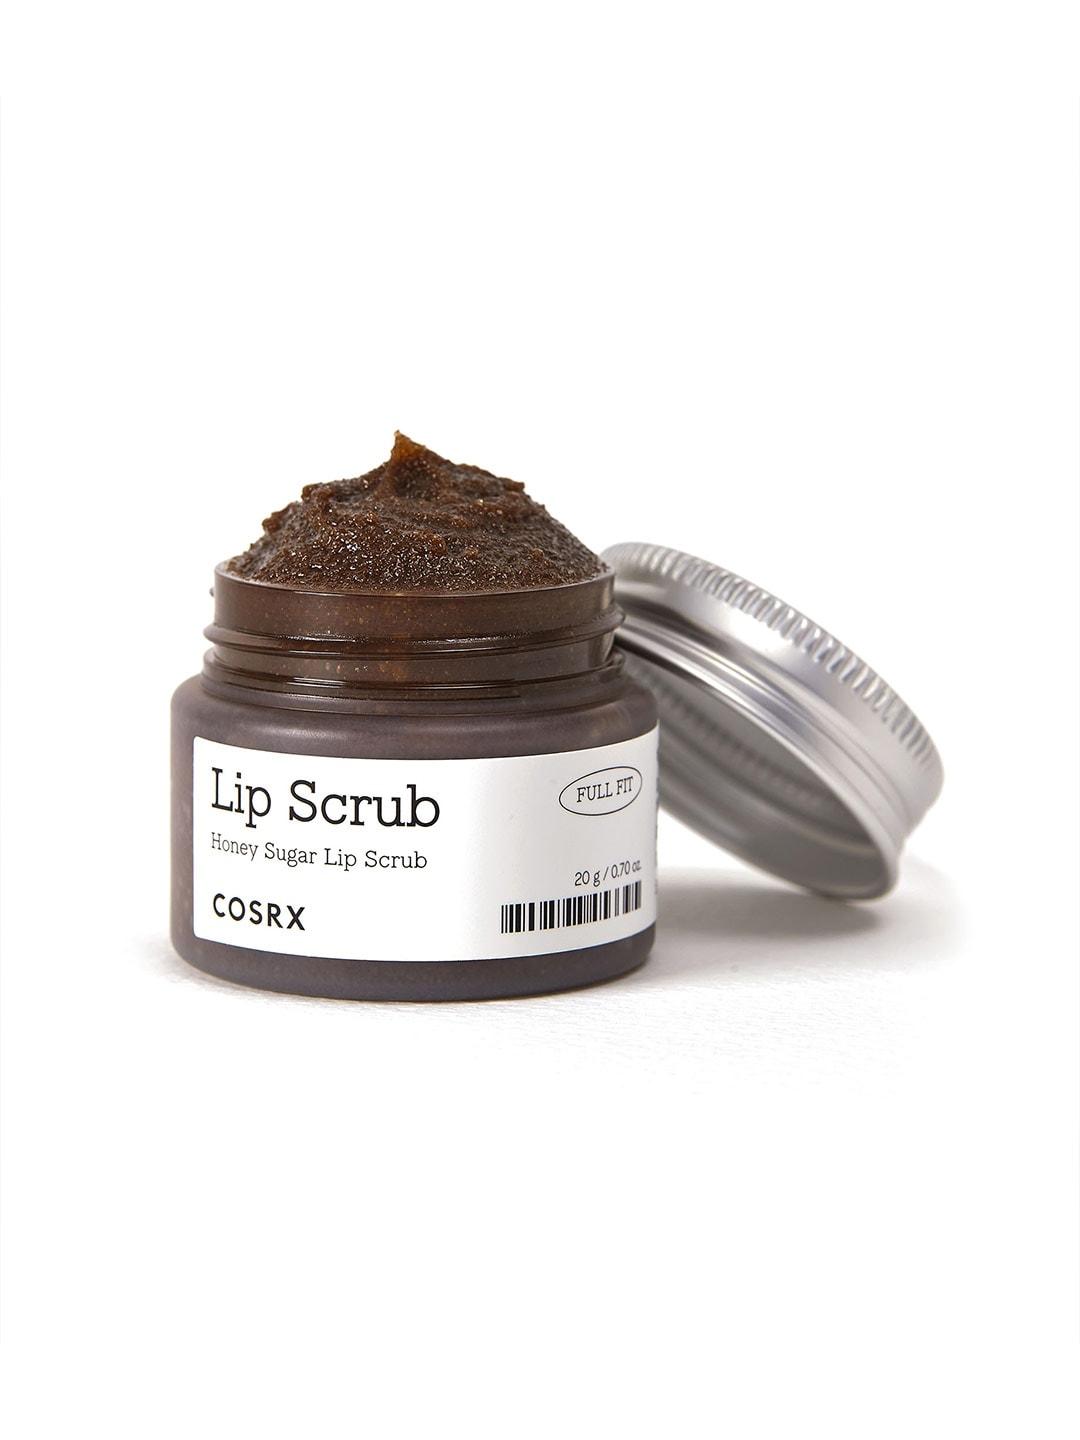 COSRX Honey Sugar Full Fit Lip Scrub with Cocoa Extract - 20 g